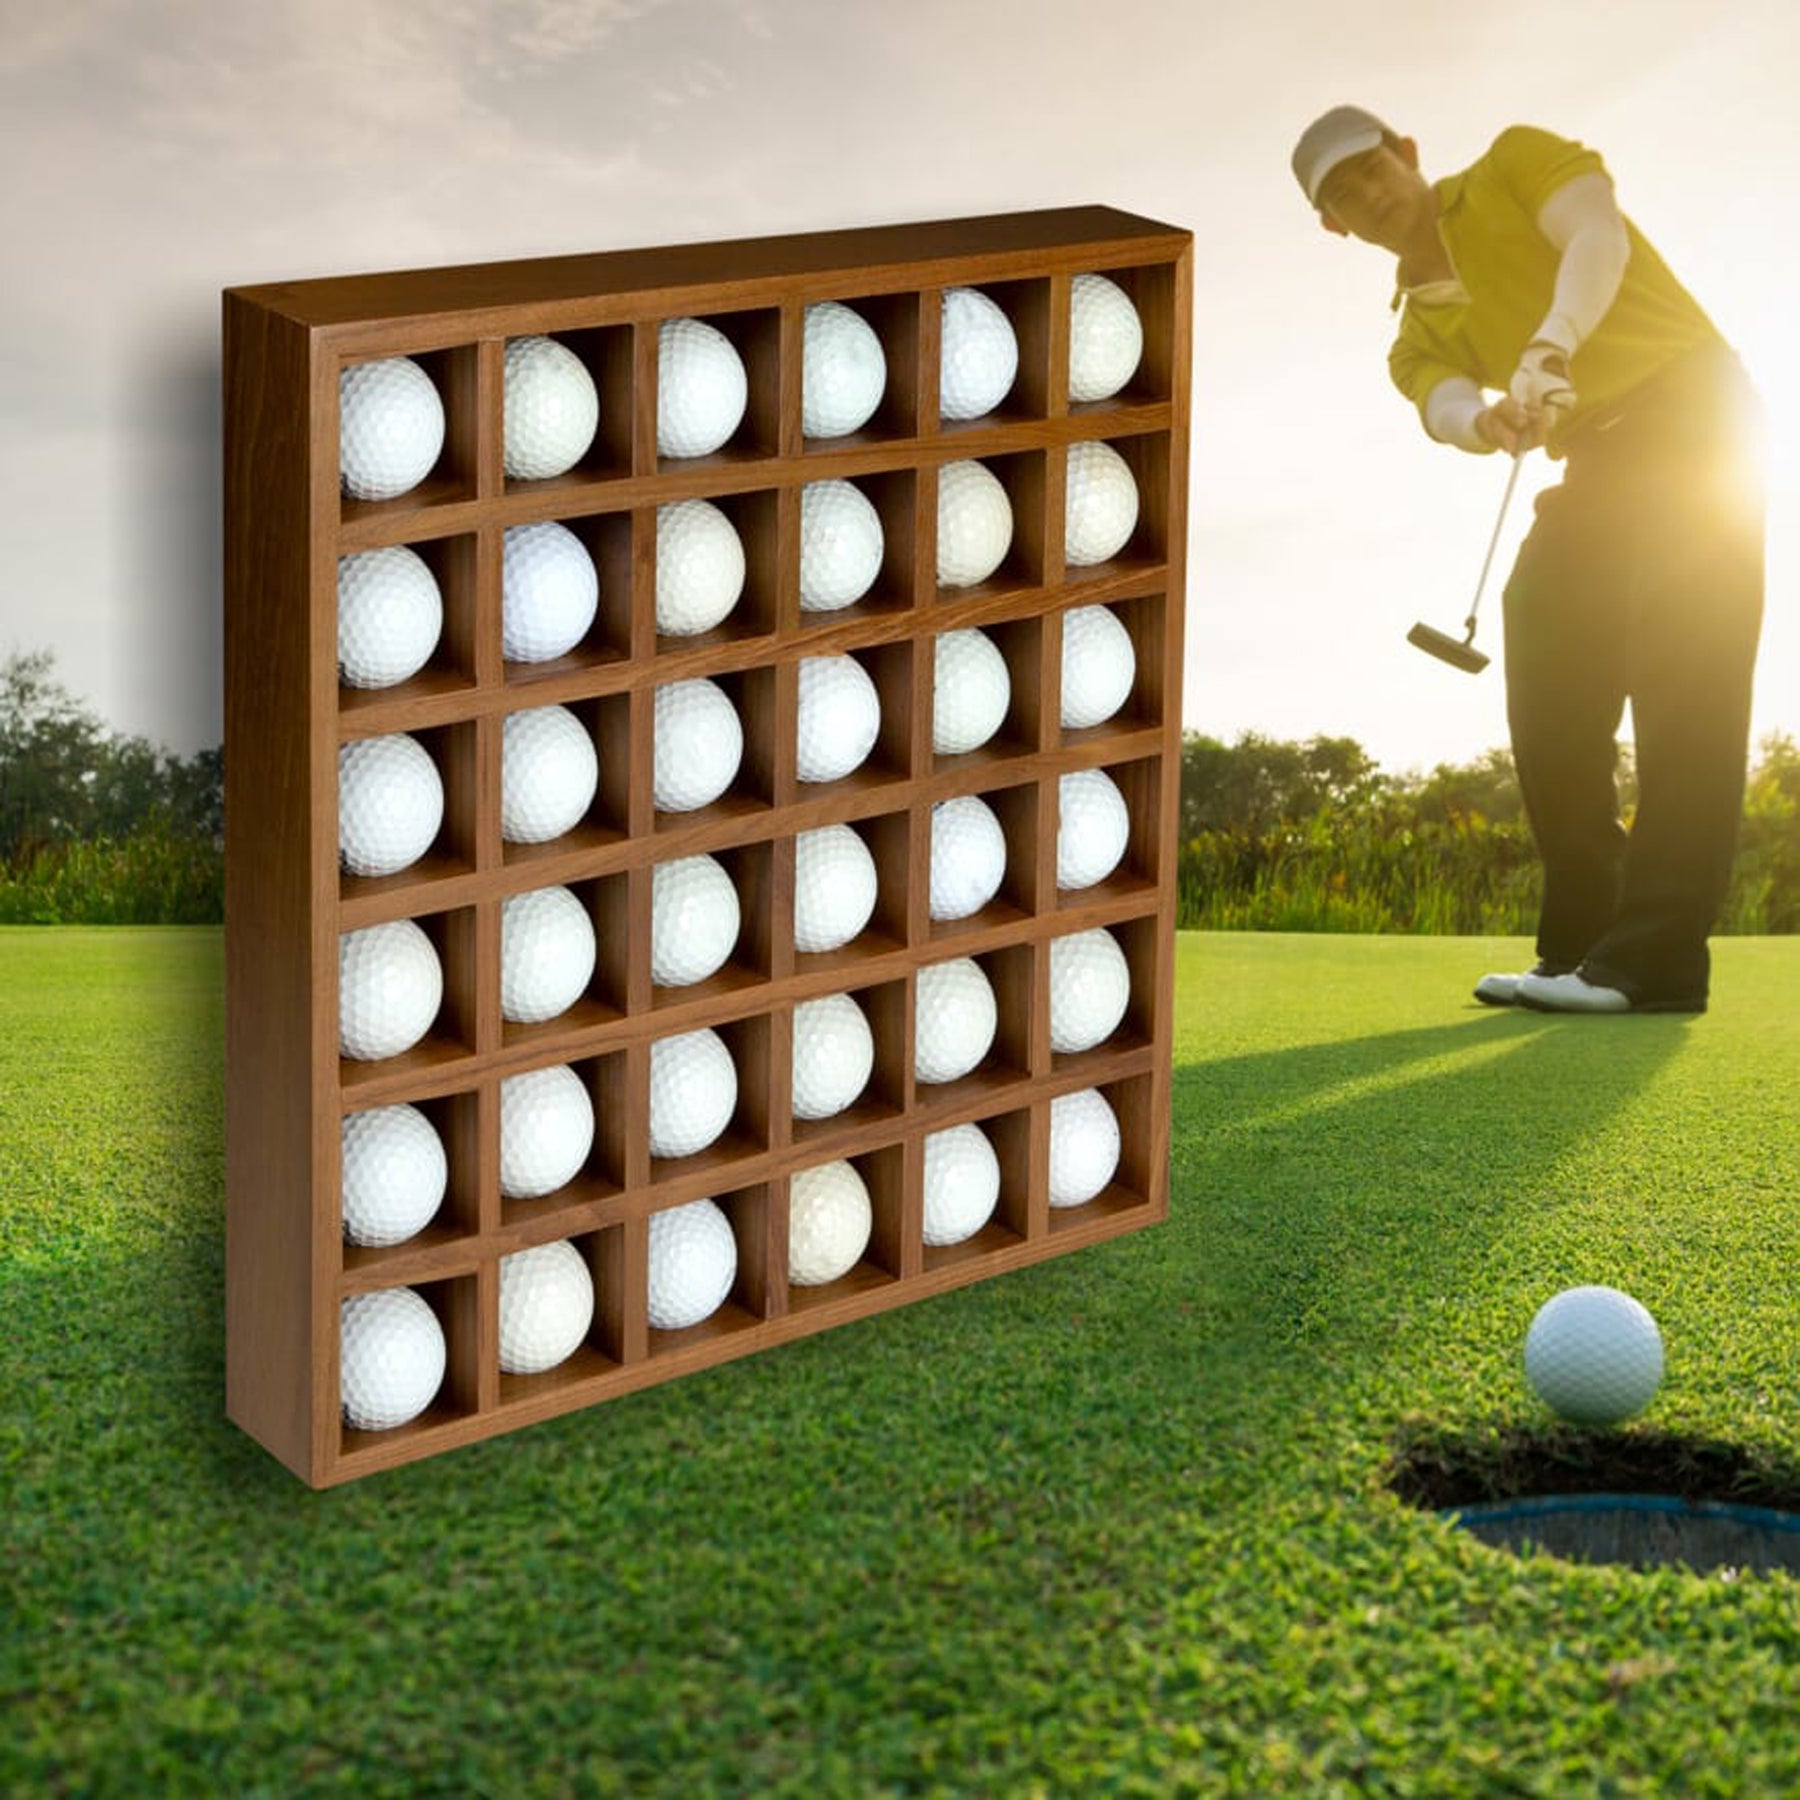 36 Golf Ball Holder/Display - 60455